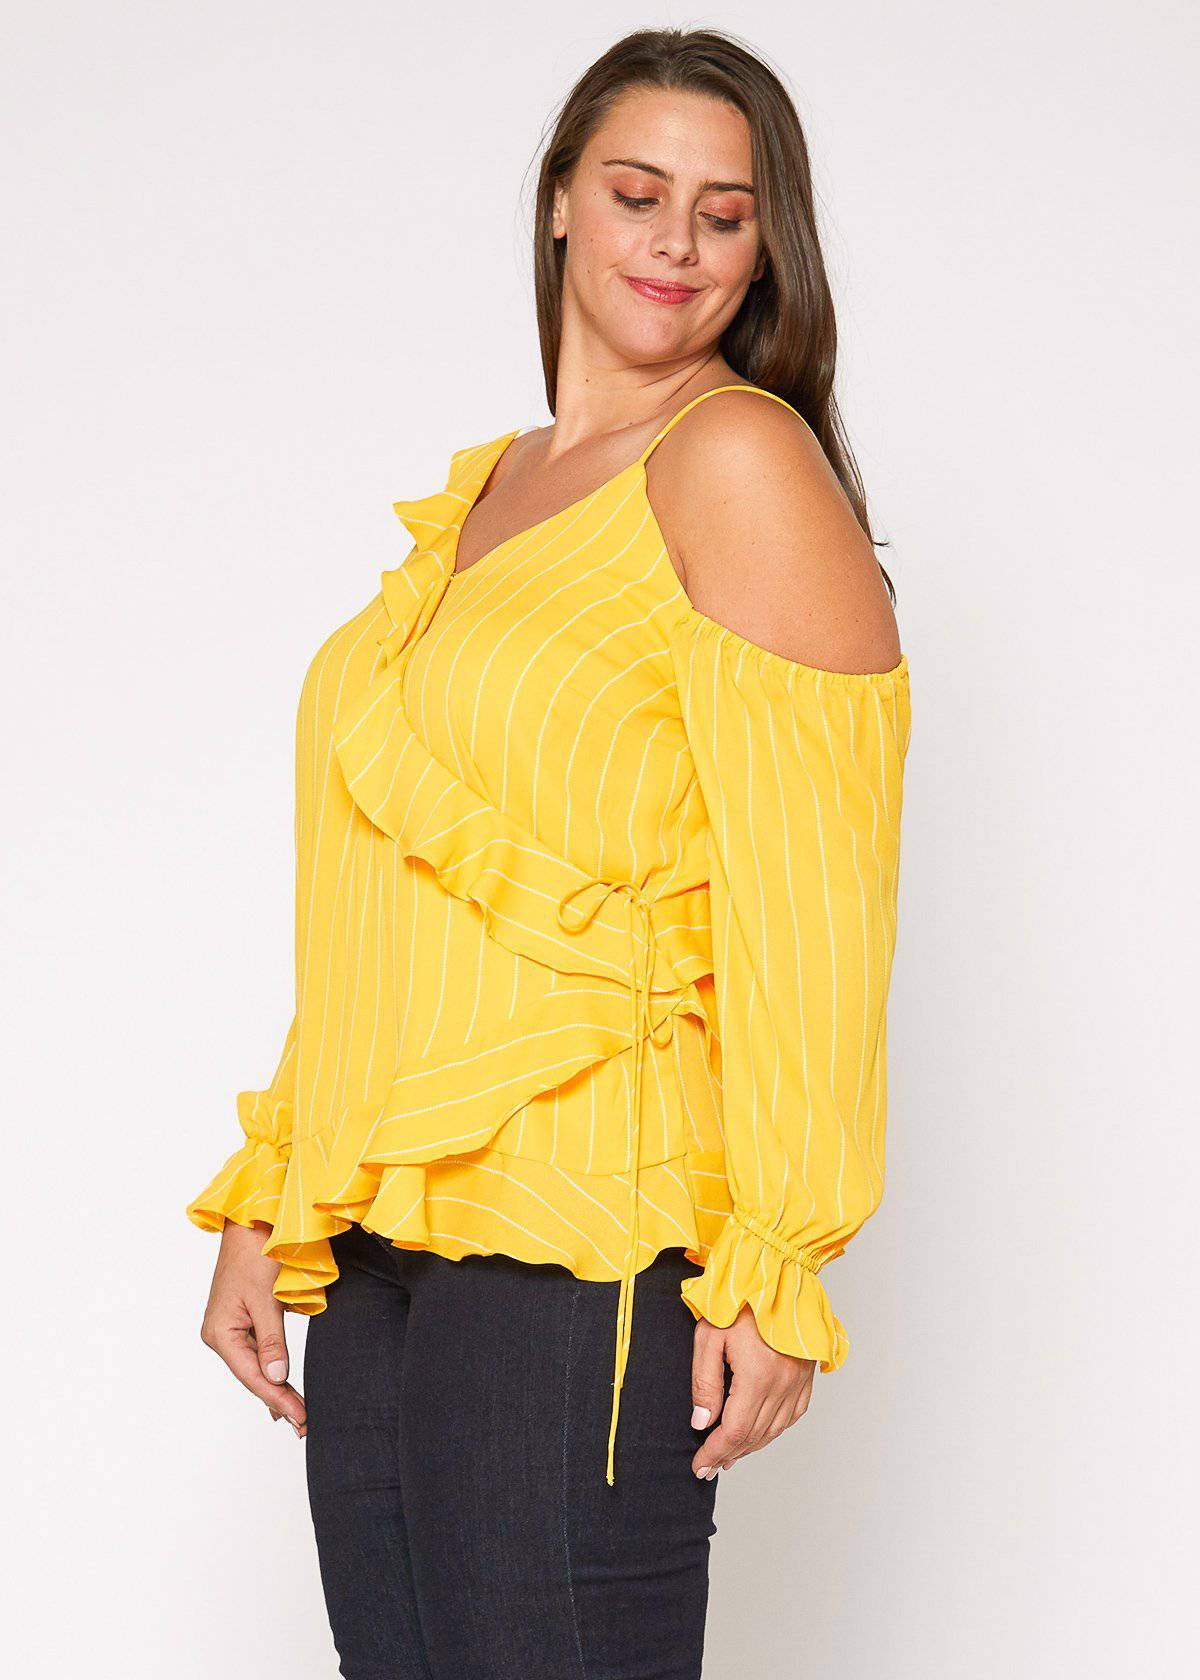 Plus Size Asymmetrical Shoulder Ruffle Blouse in Yellow by Shop at Konus